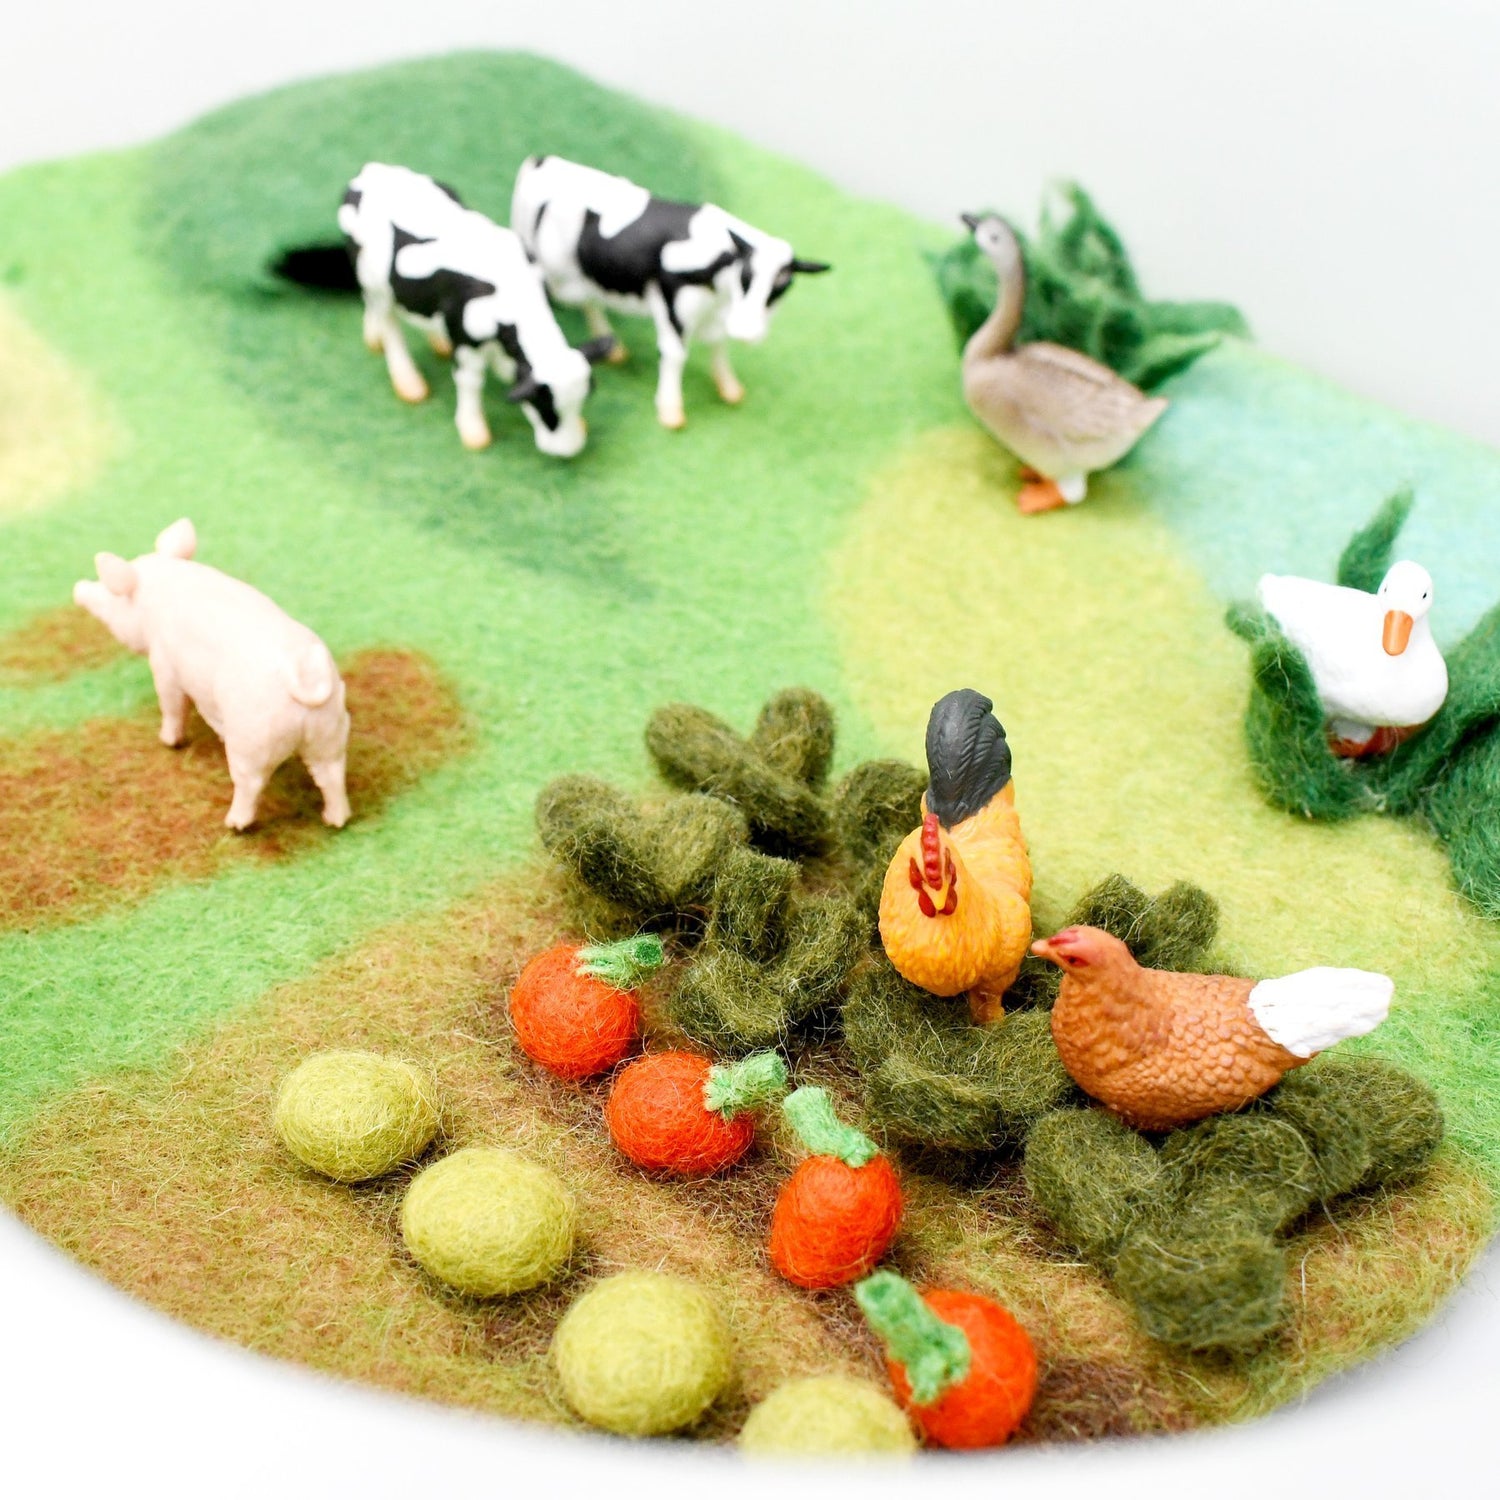 FARM FELT PLAY MAT PLAYSCAPE by TARA TREASURES - The Playful Collective